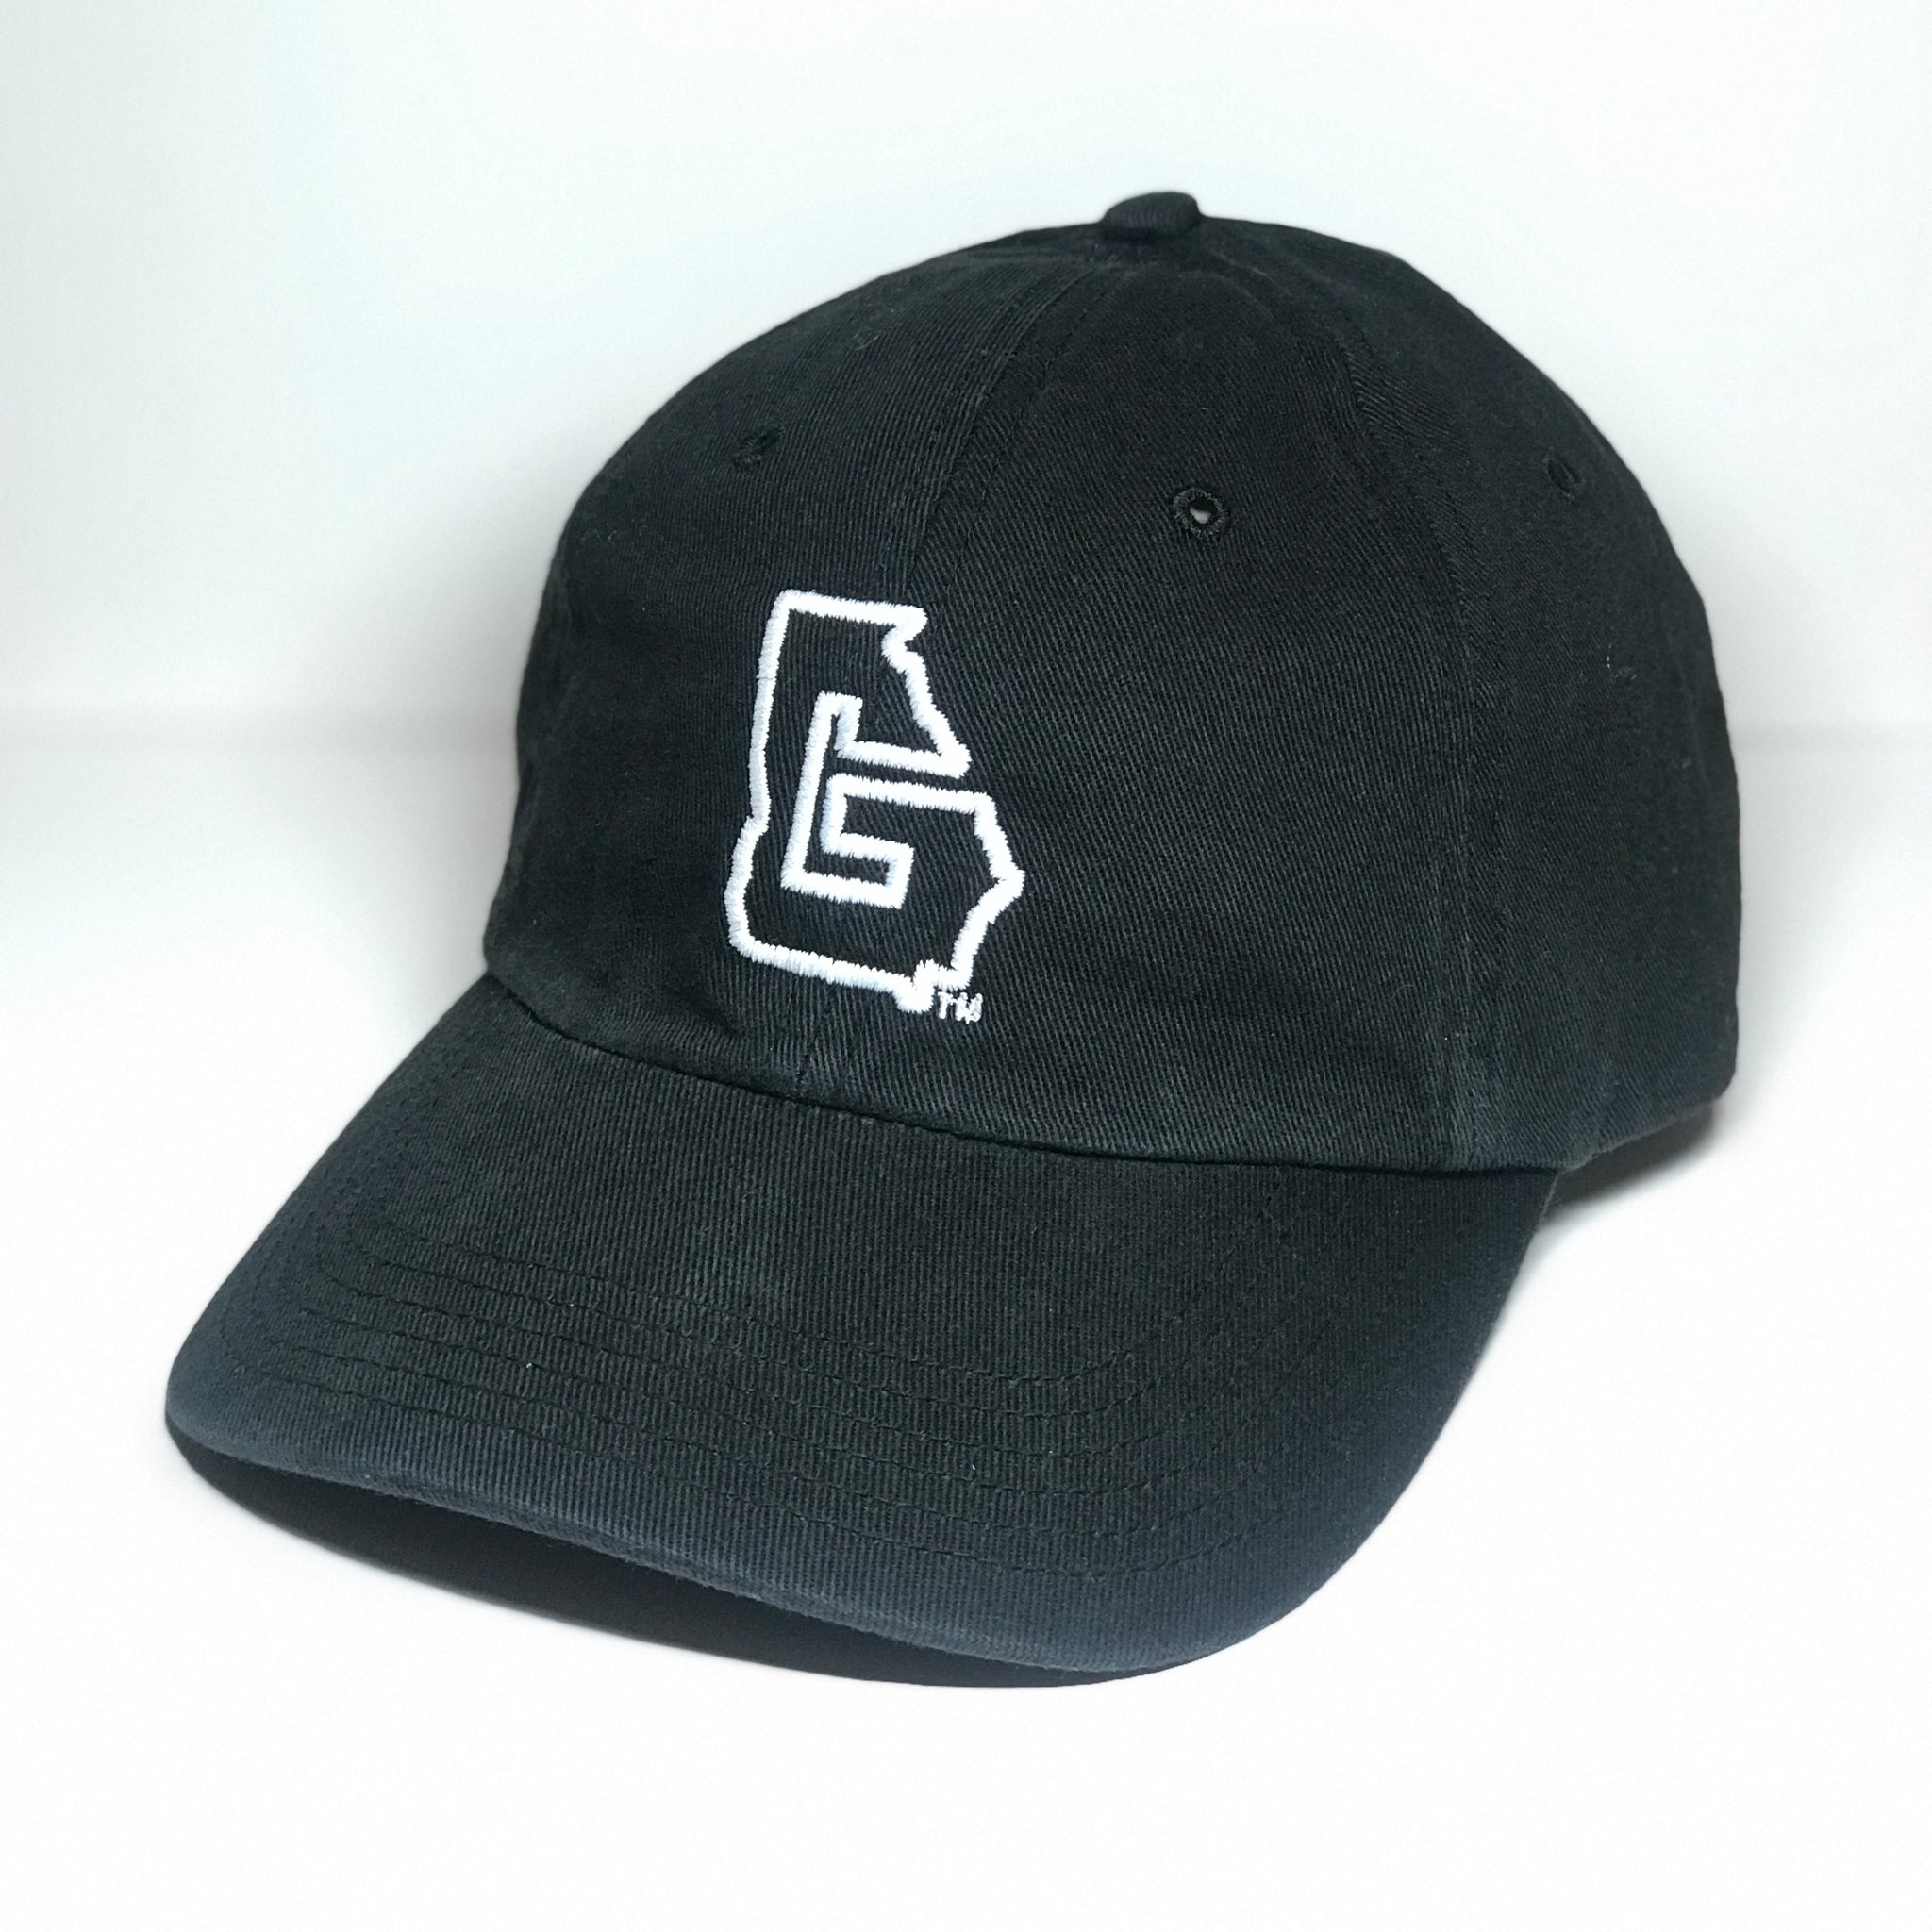 Black Adjustable Hat